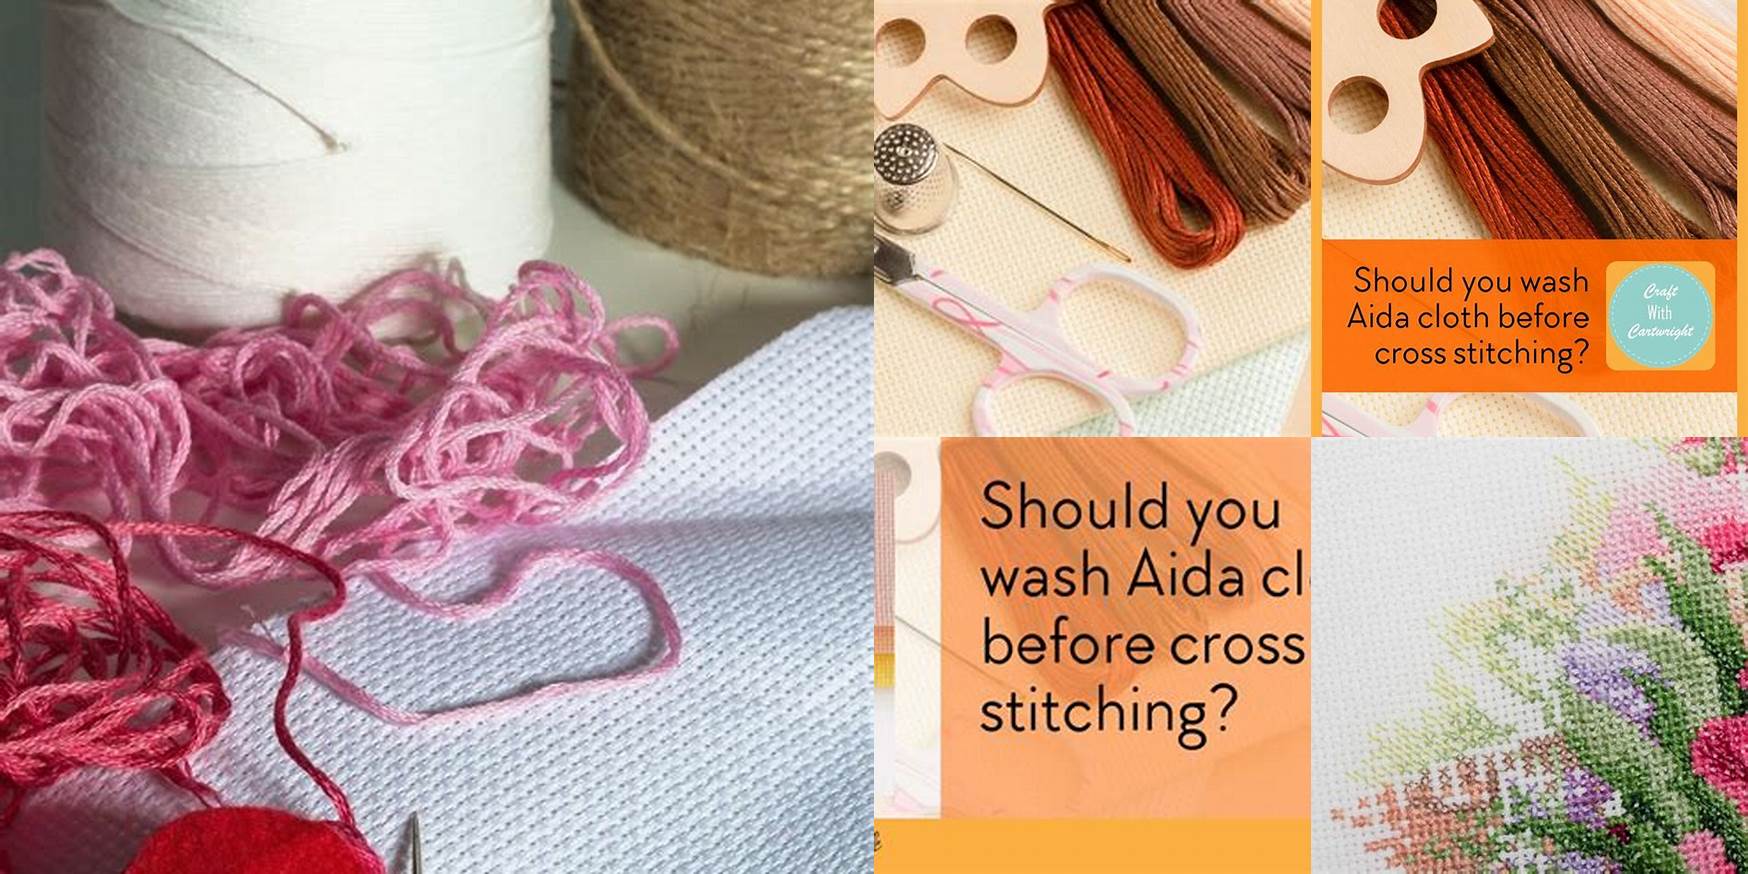 Should You Wash Aida Cloth Before Cross Stitching